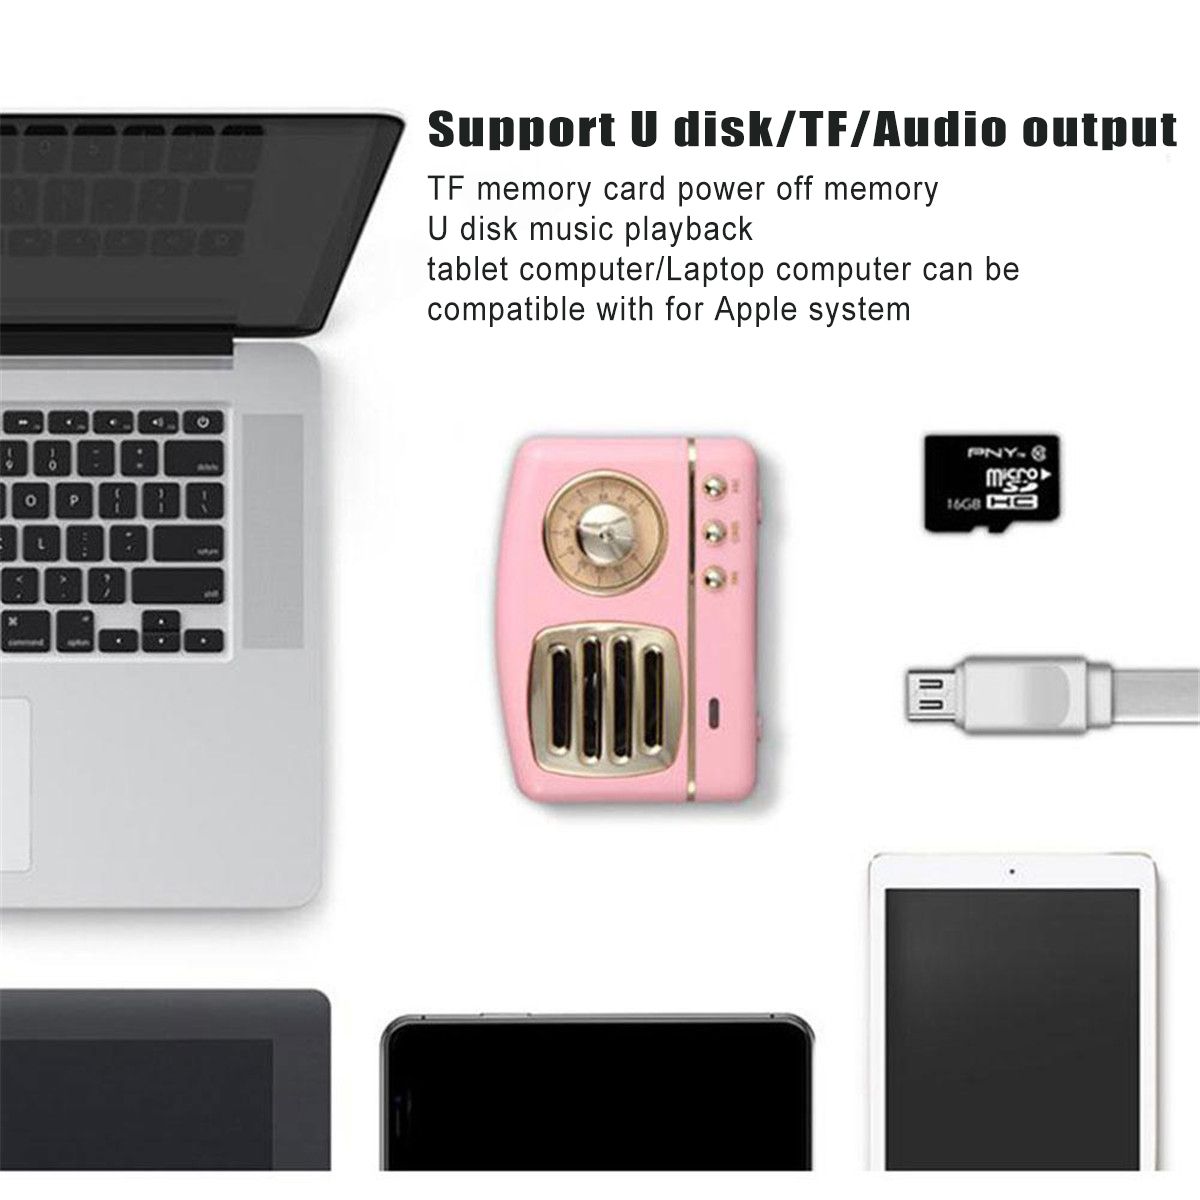 HIFI-Mini-Retro-Wireless-bluetooth-Speaker-Portable-FM-Radio-TF-Card-U-disk-35mm-Audio-Speaker-with--1416810